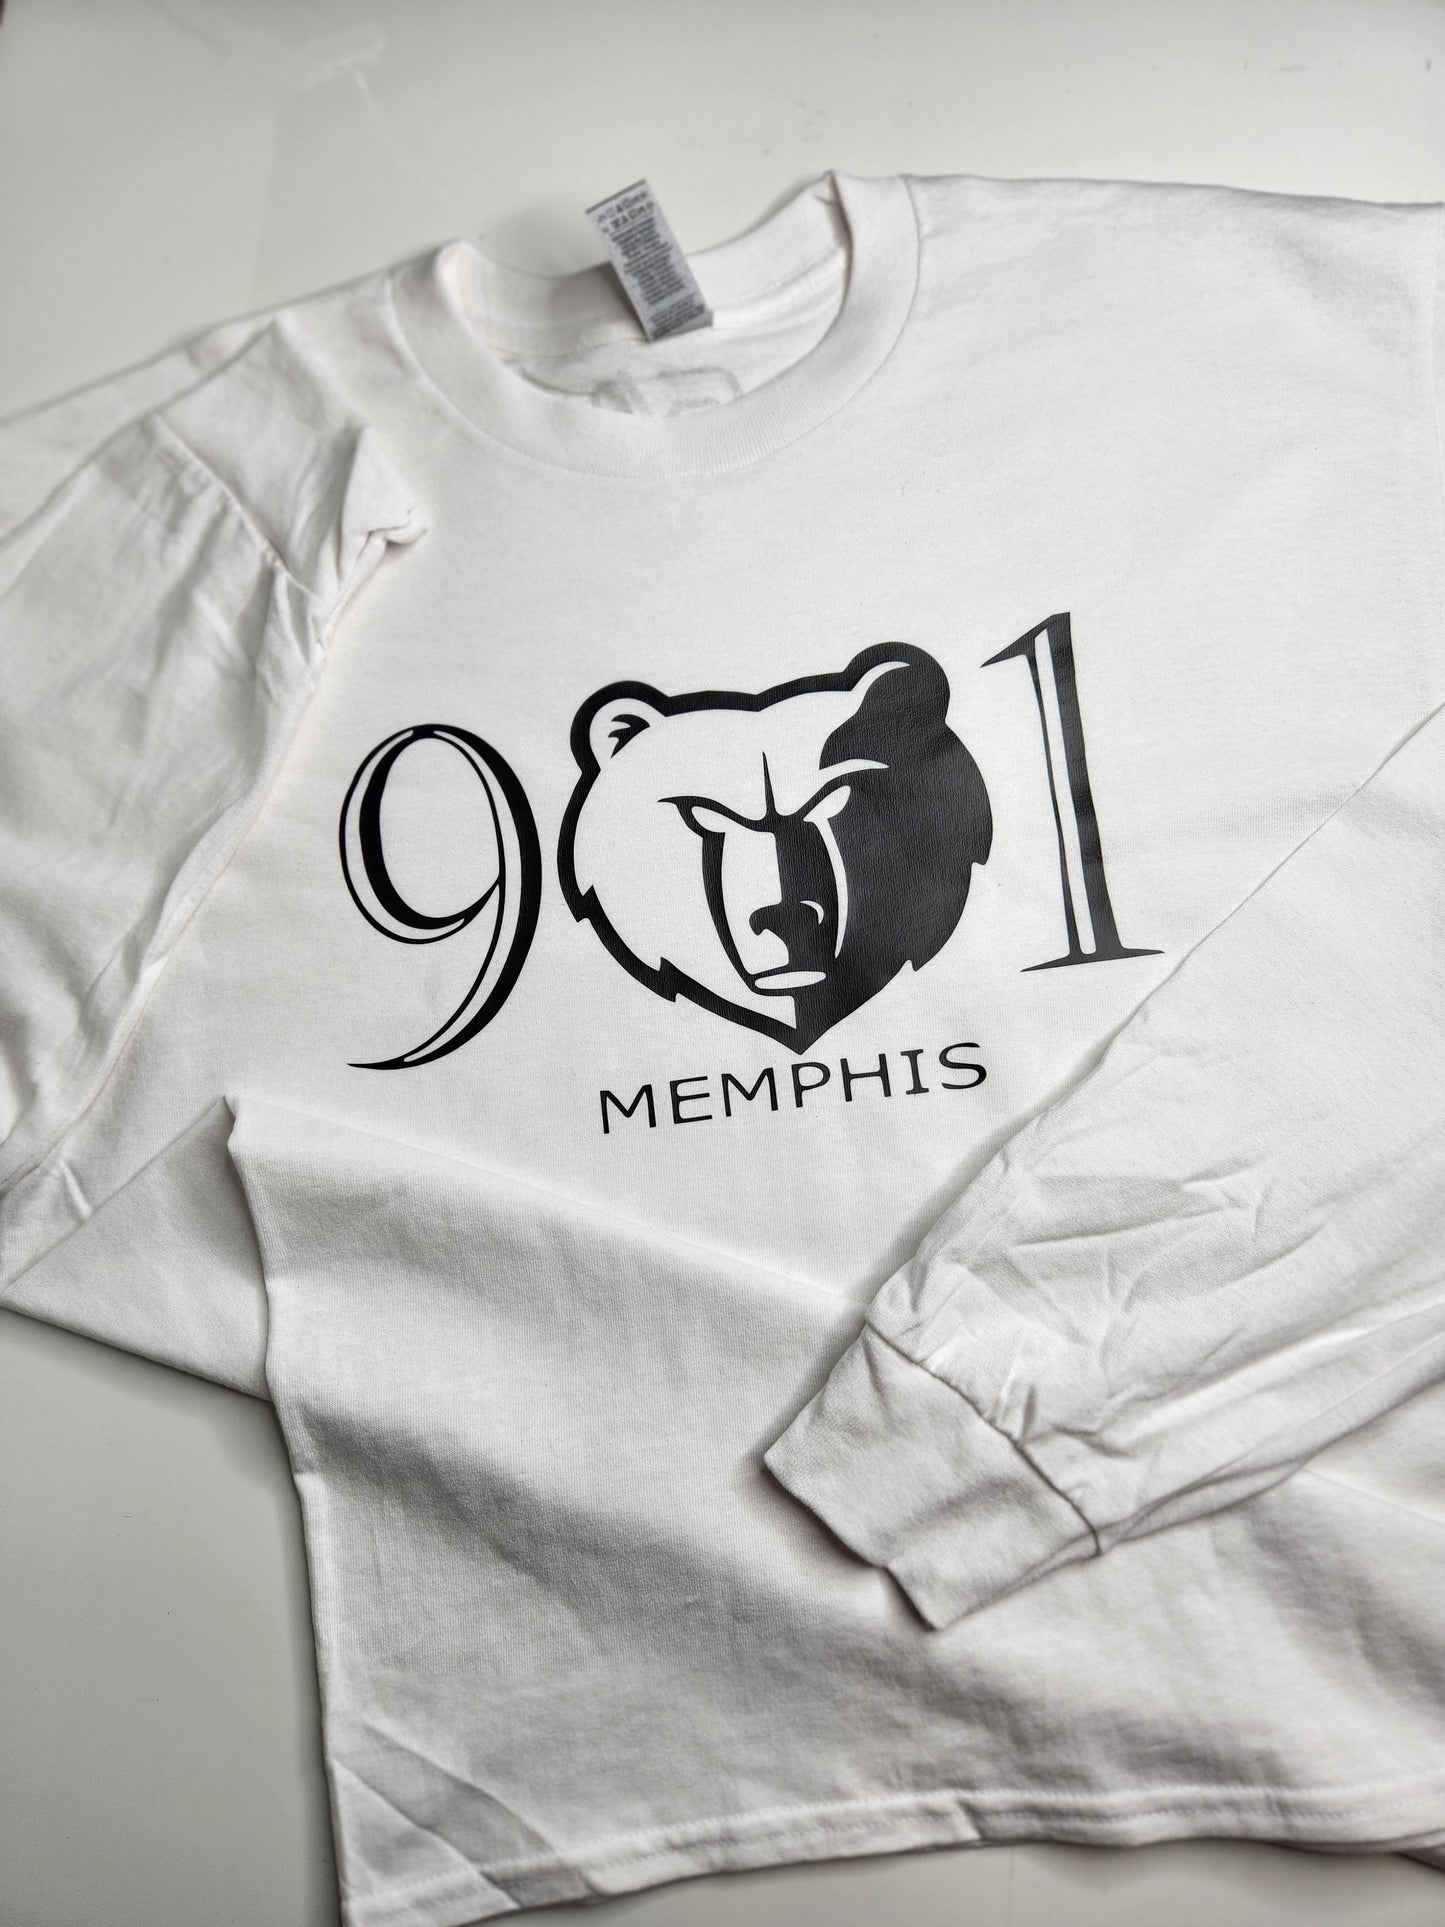 901 Memphis Long Sleeve Tee